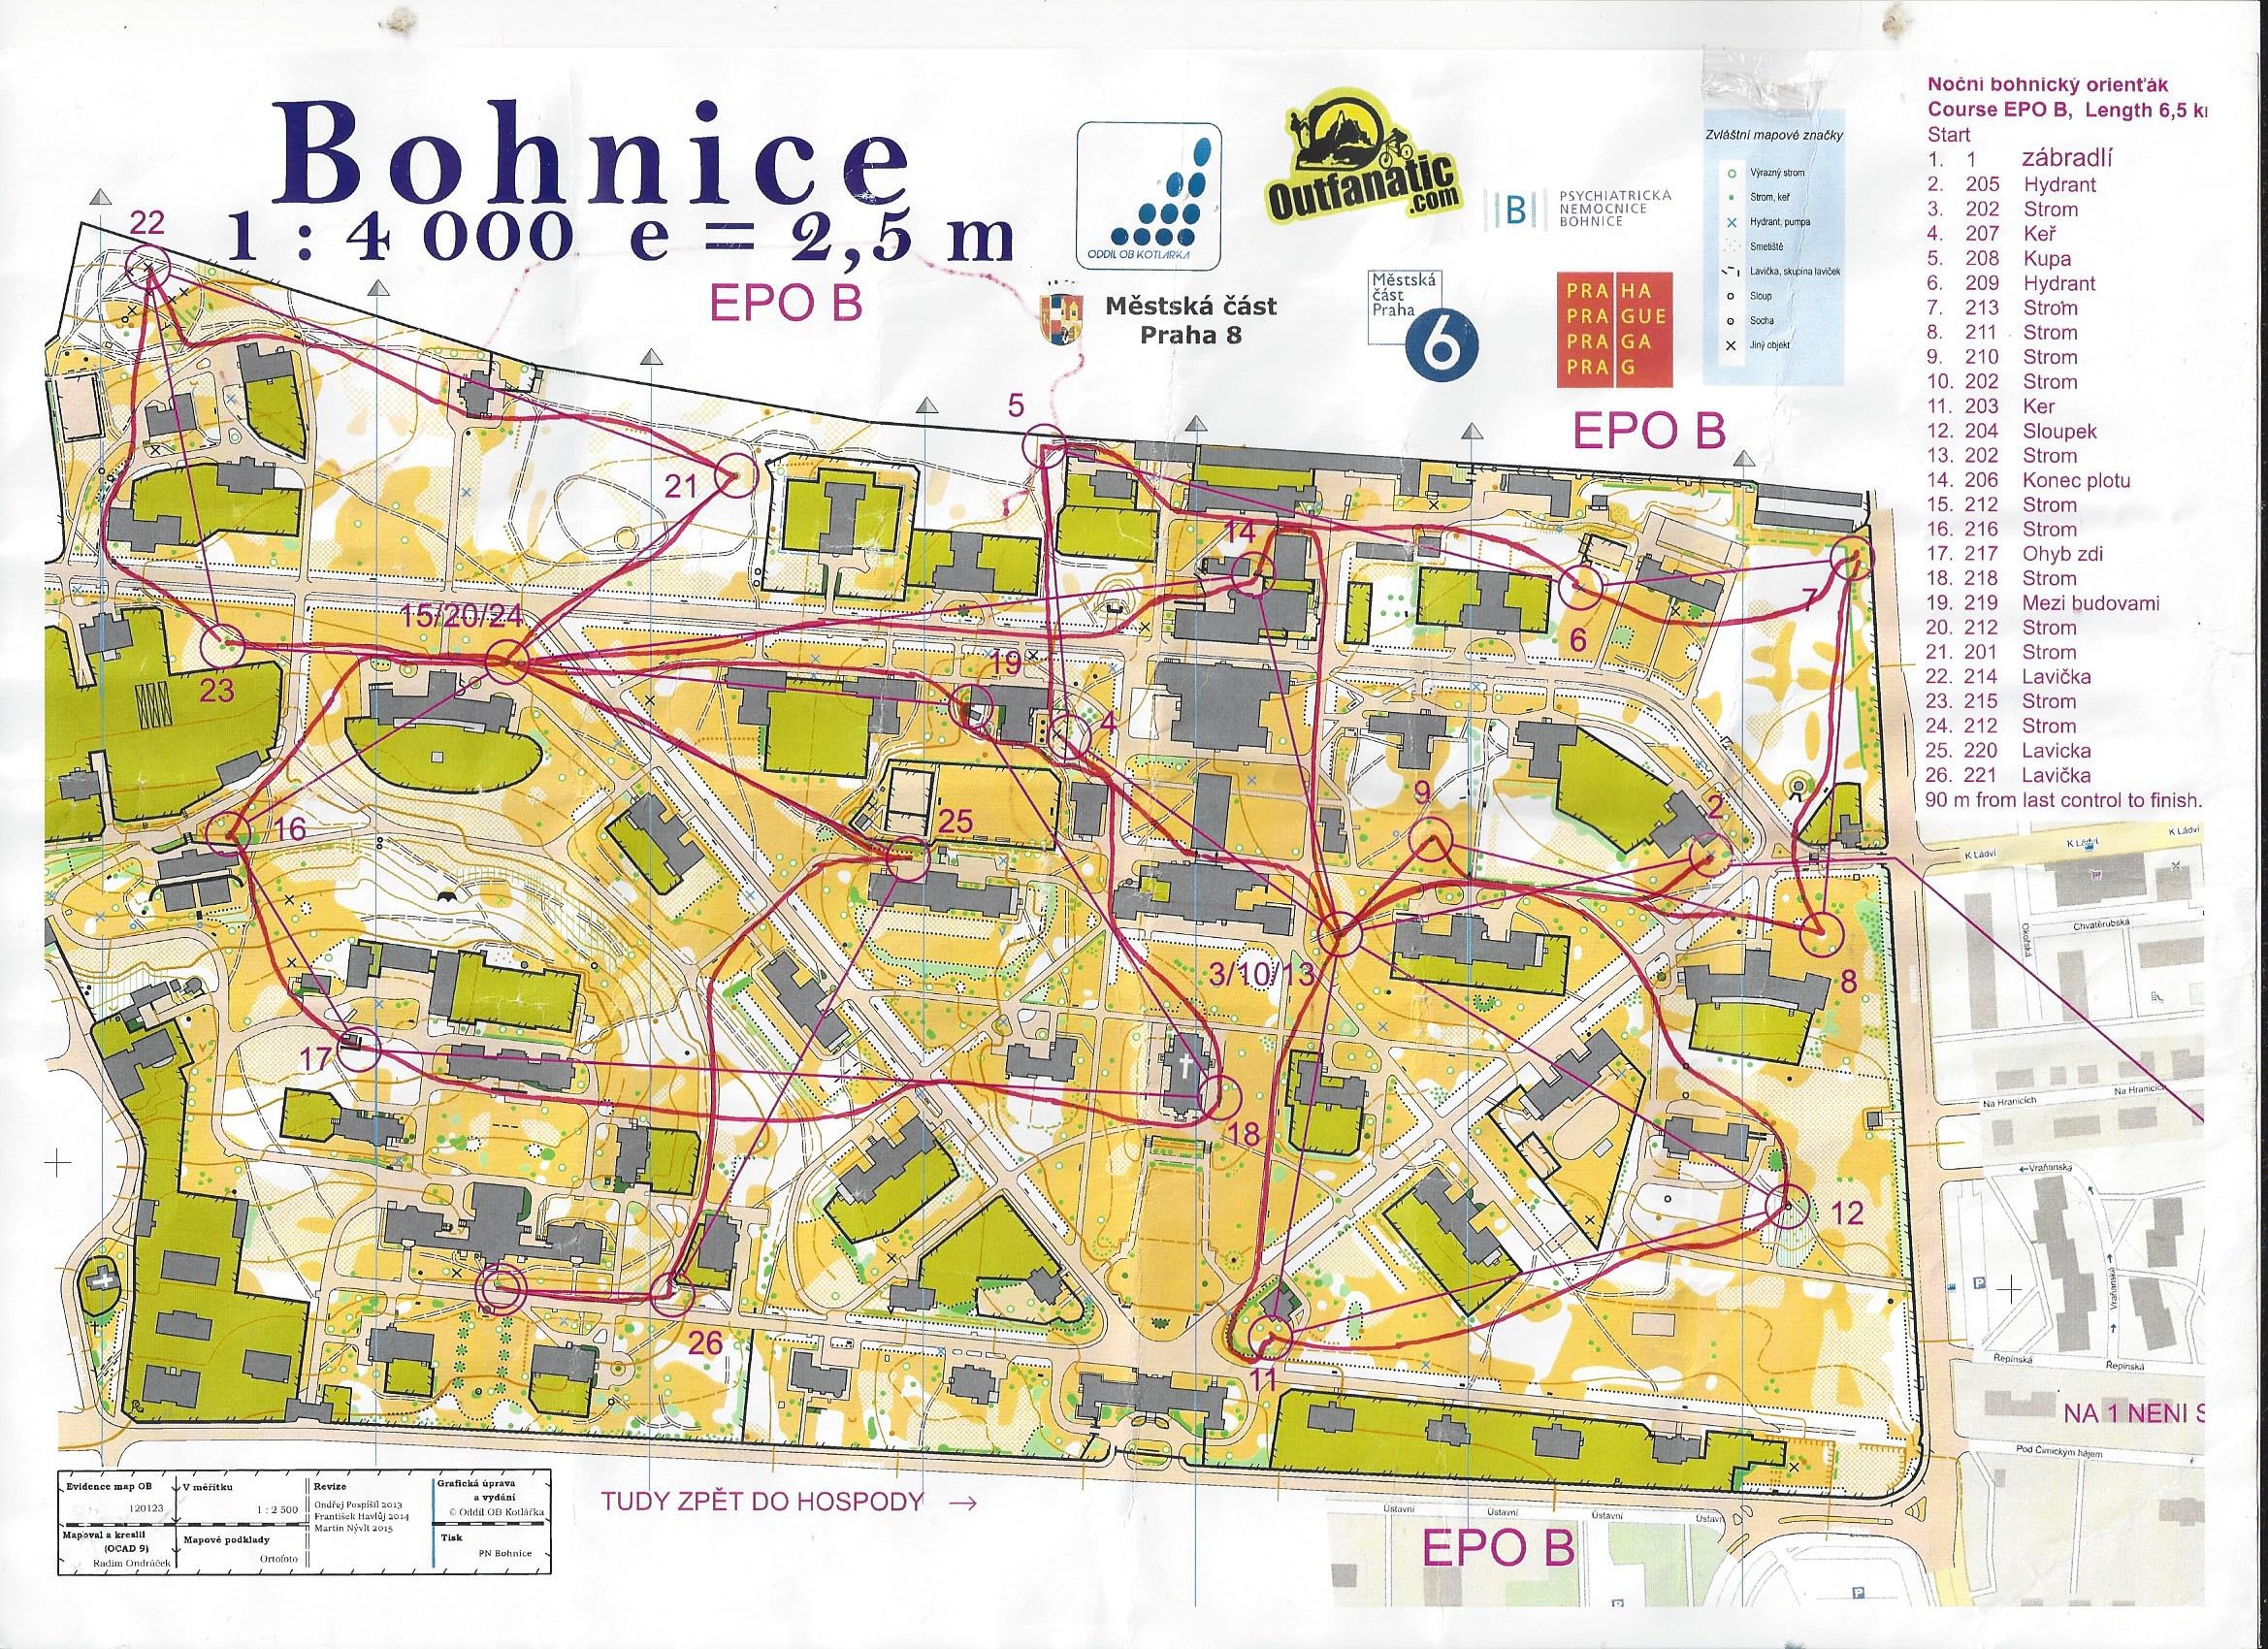 EPO OB Bohnice - B / mapa 2 (20/10/2015)